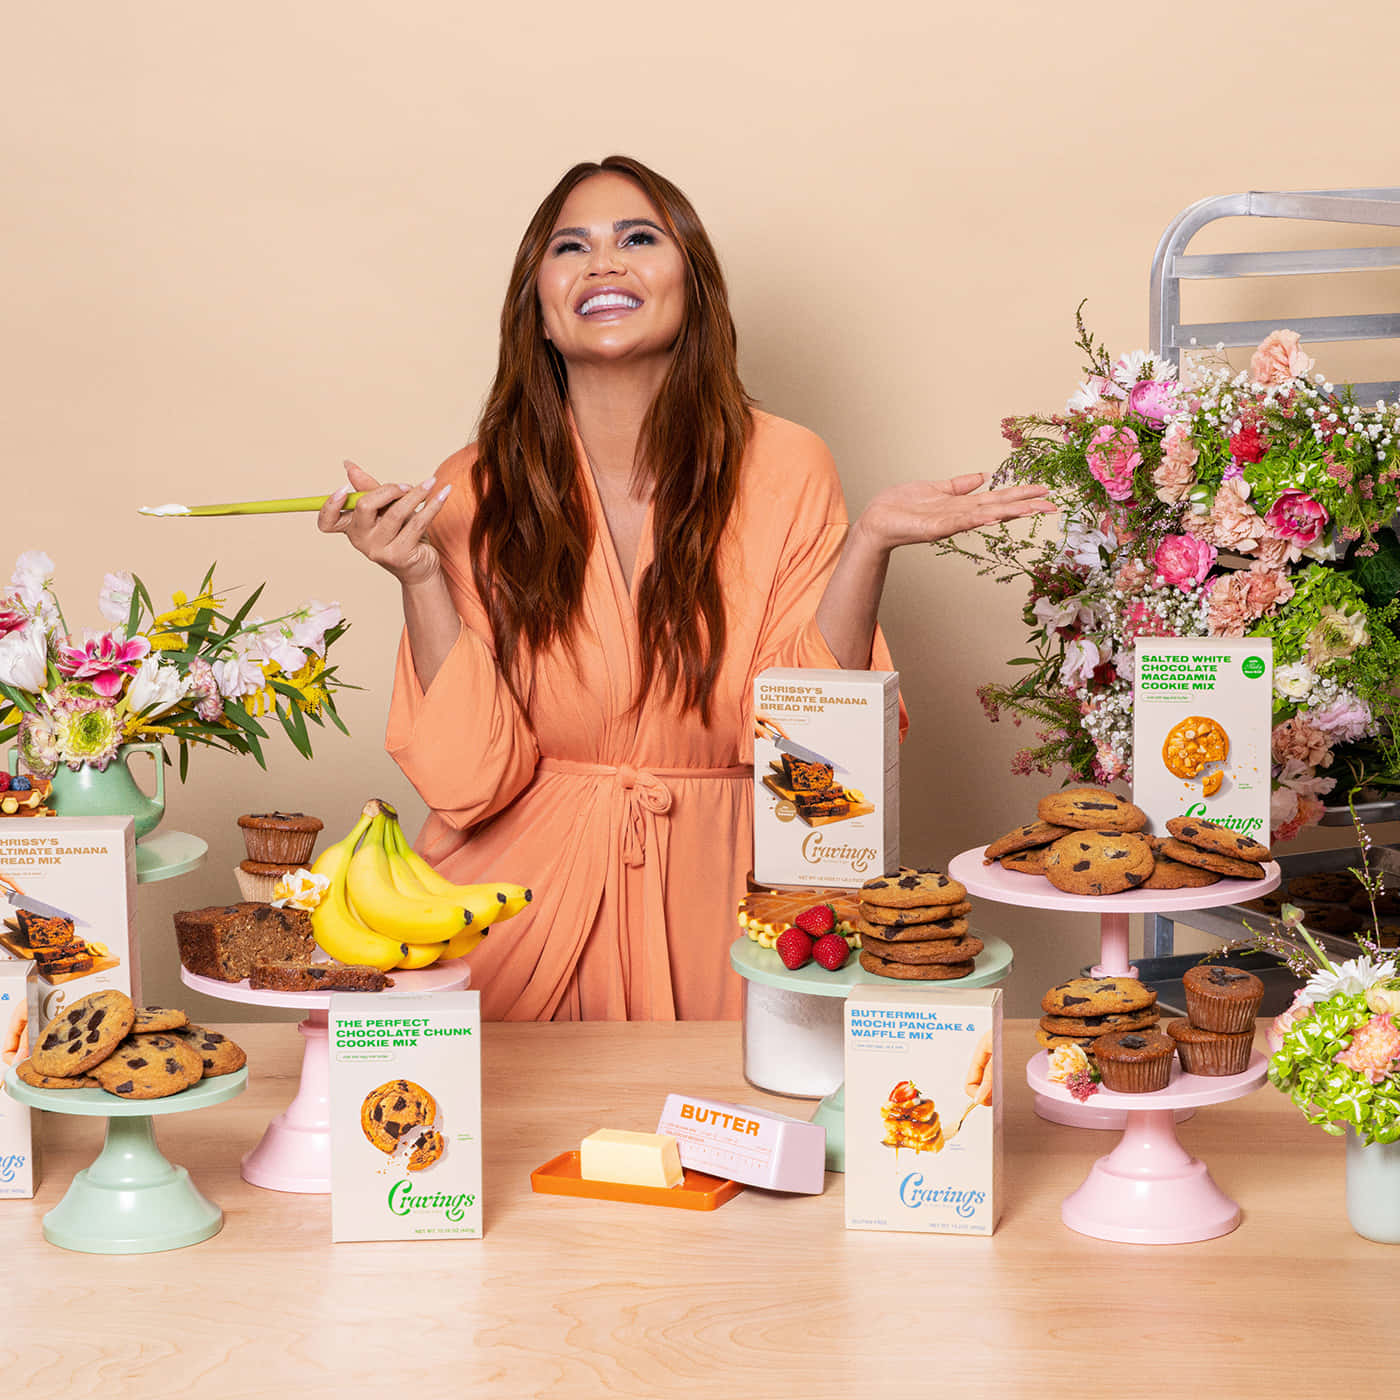 Chrissy Teigen Celebrating Baked Goods Background